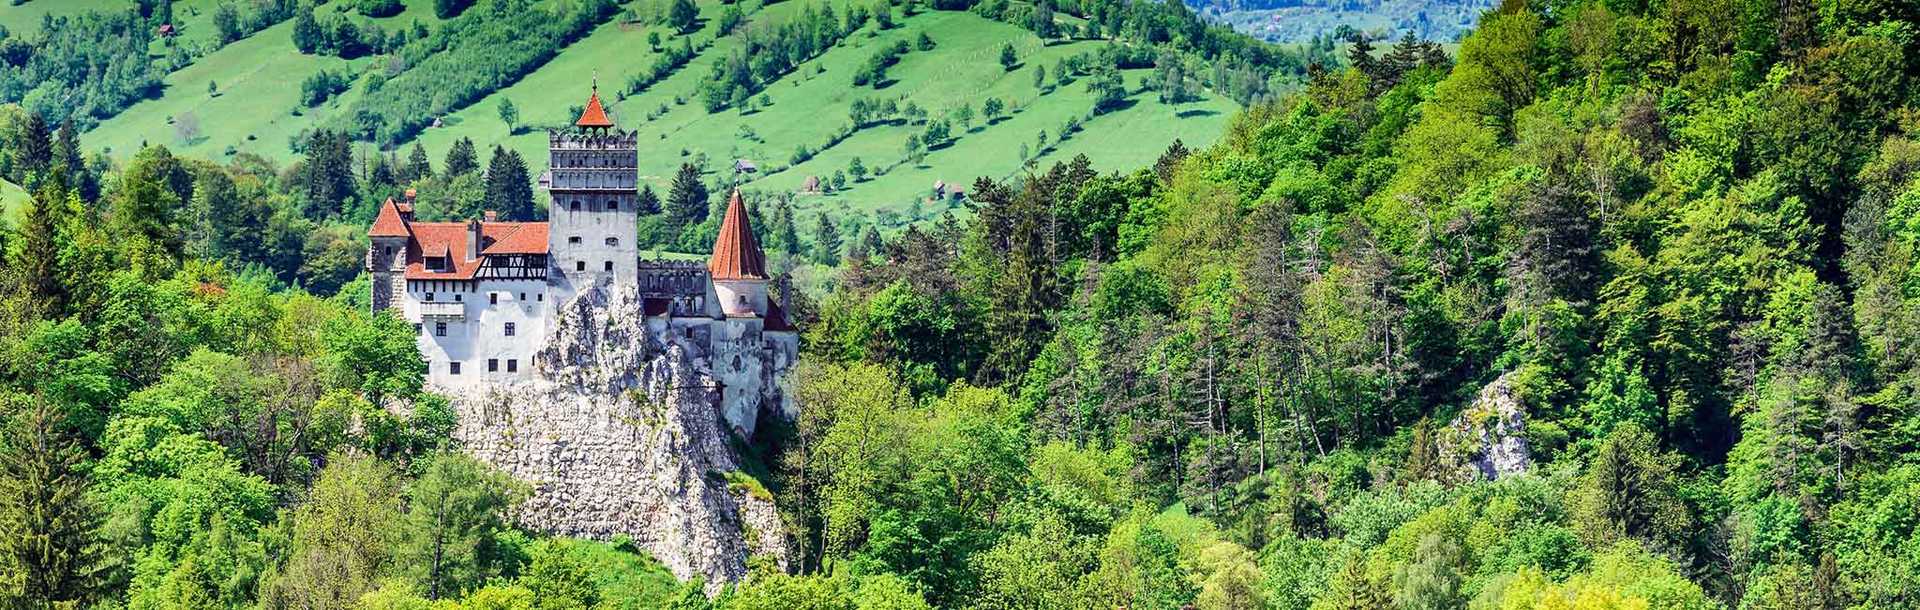 Romania Tours - Bran Castle near the Transylvanian border